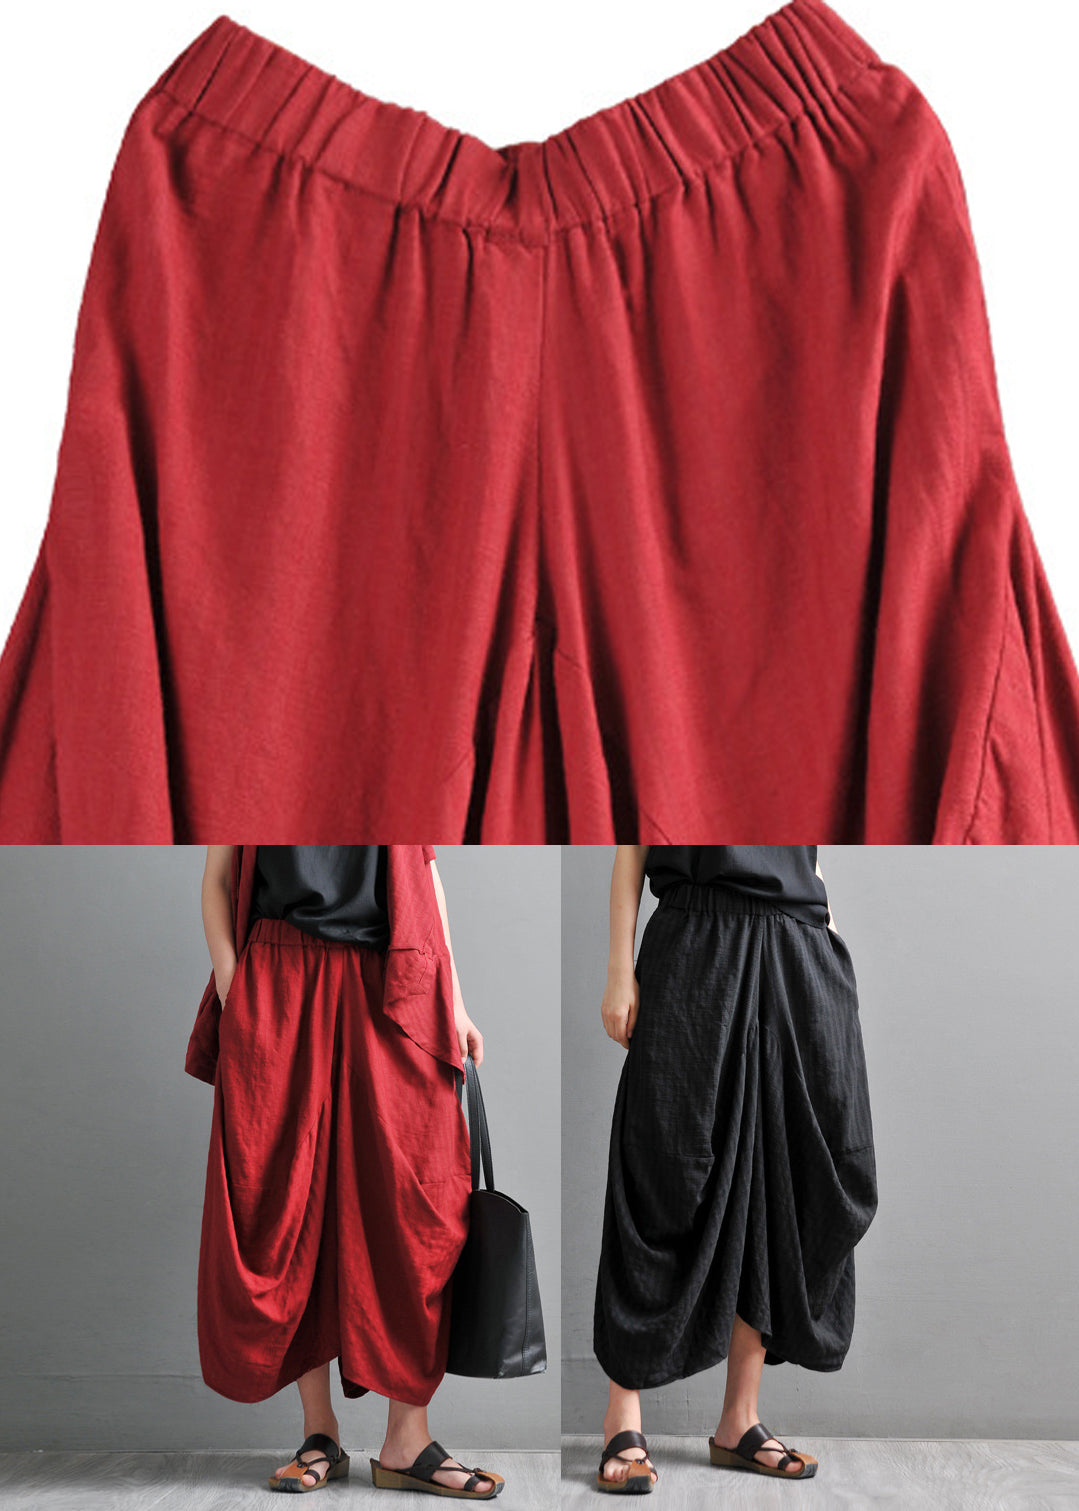 Black Asymmetrical Elastic Waist Pockets Pants Skirt Summer